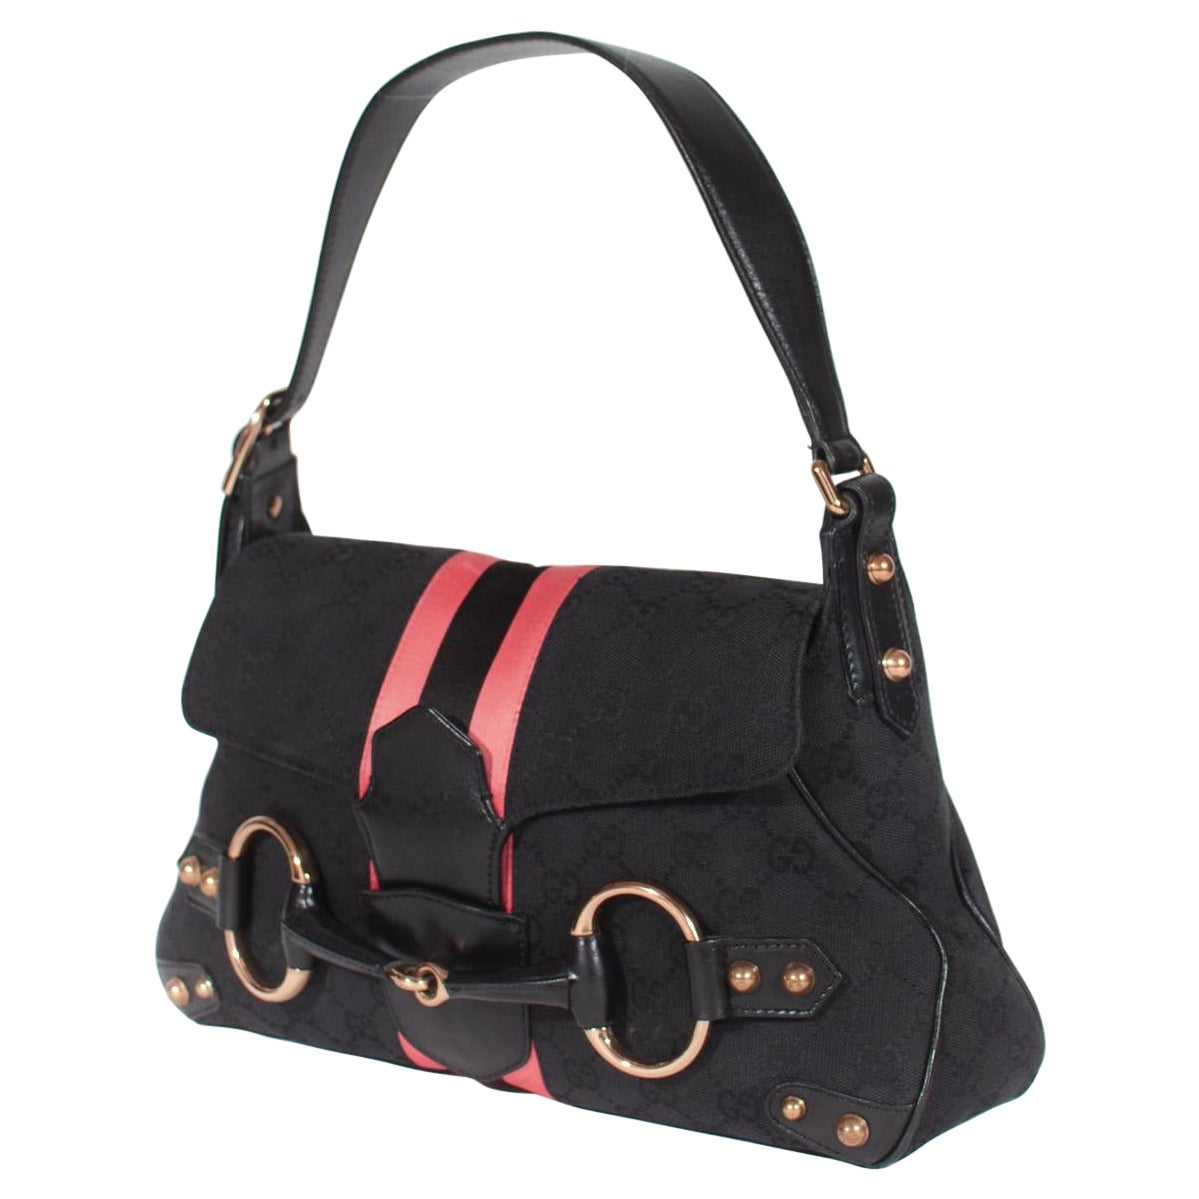 S/S 2004 Gucci by Tom Ford Black GG Horsebit Shoulder Bag with Pink Satin Stripe